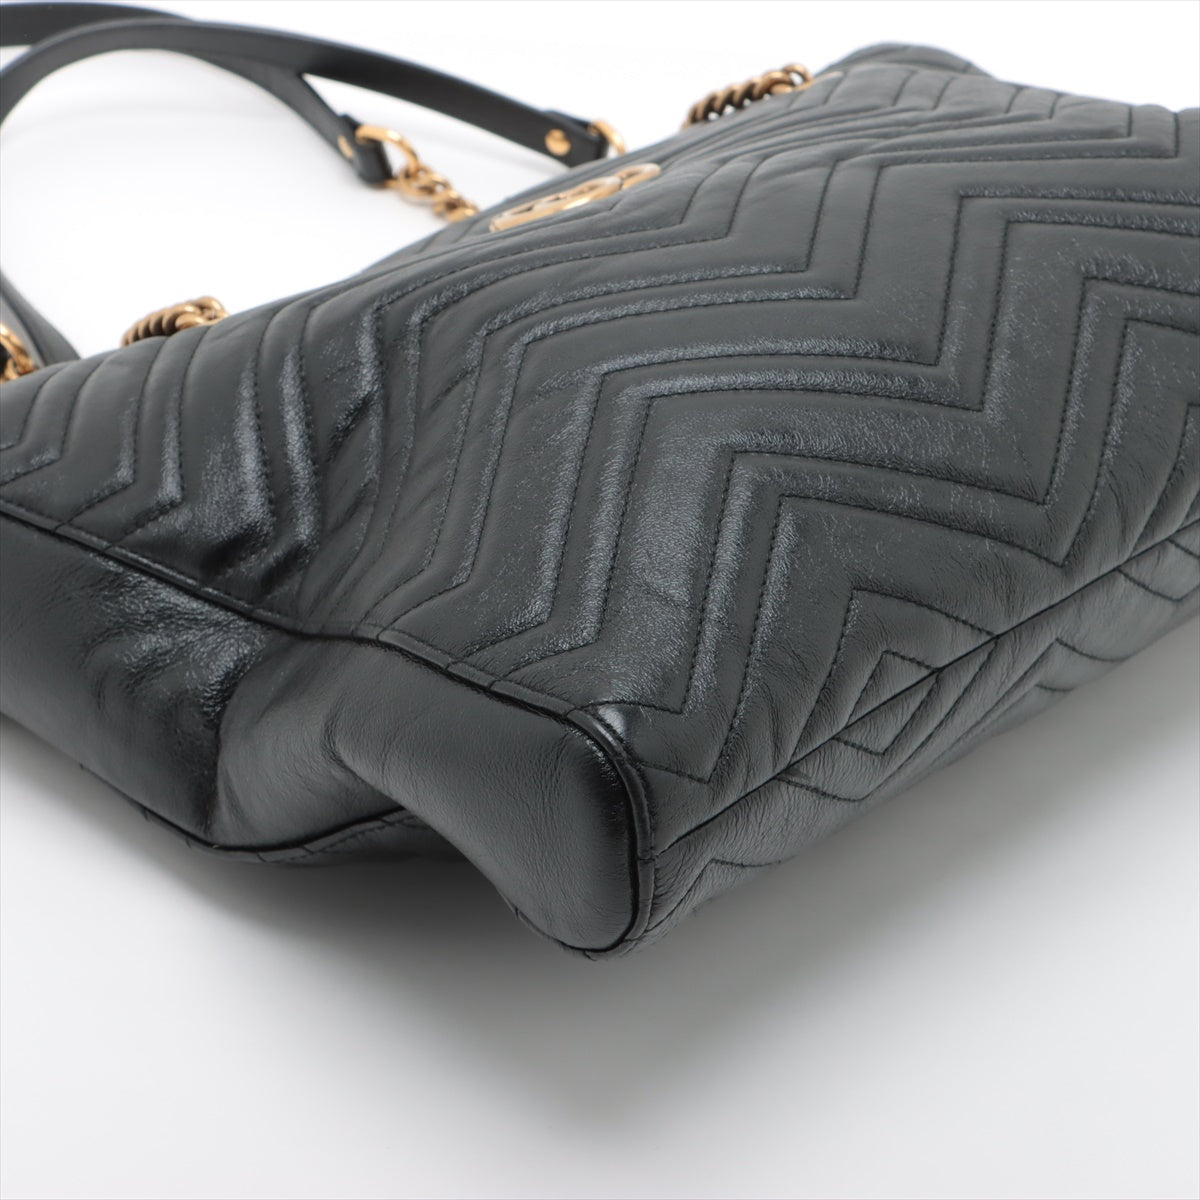 Gucci GG Marmont Leather Chain tote bag Black 524578